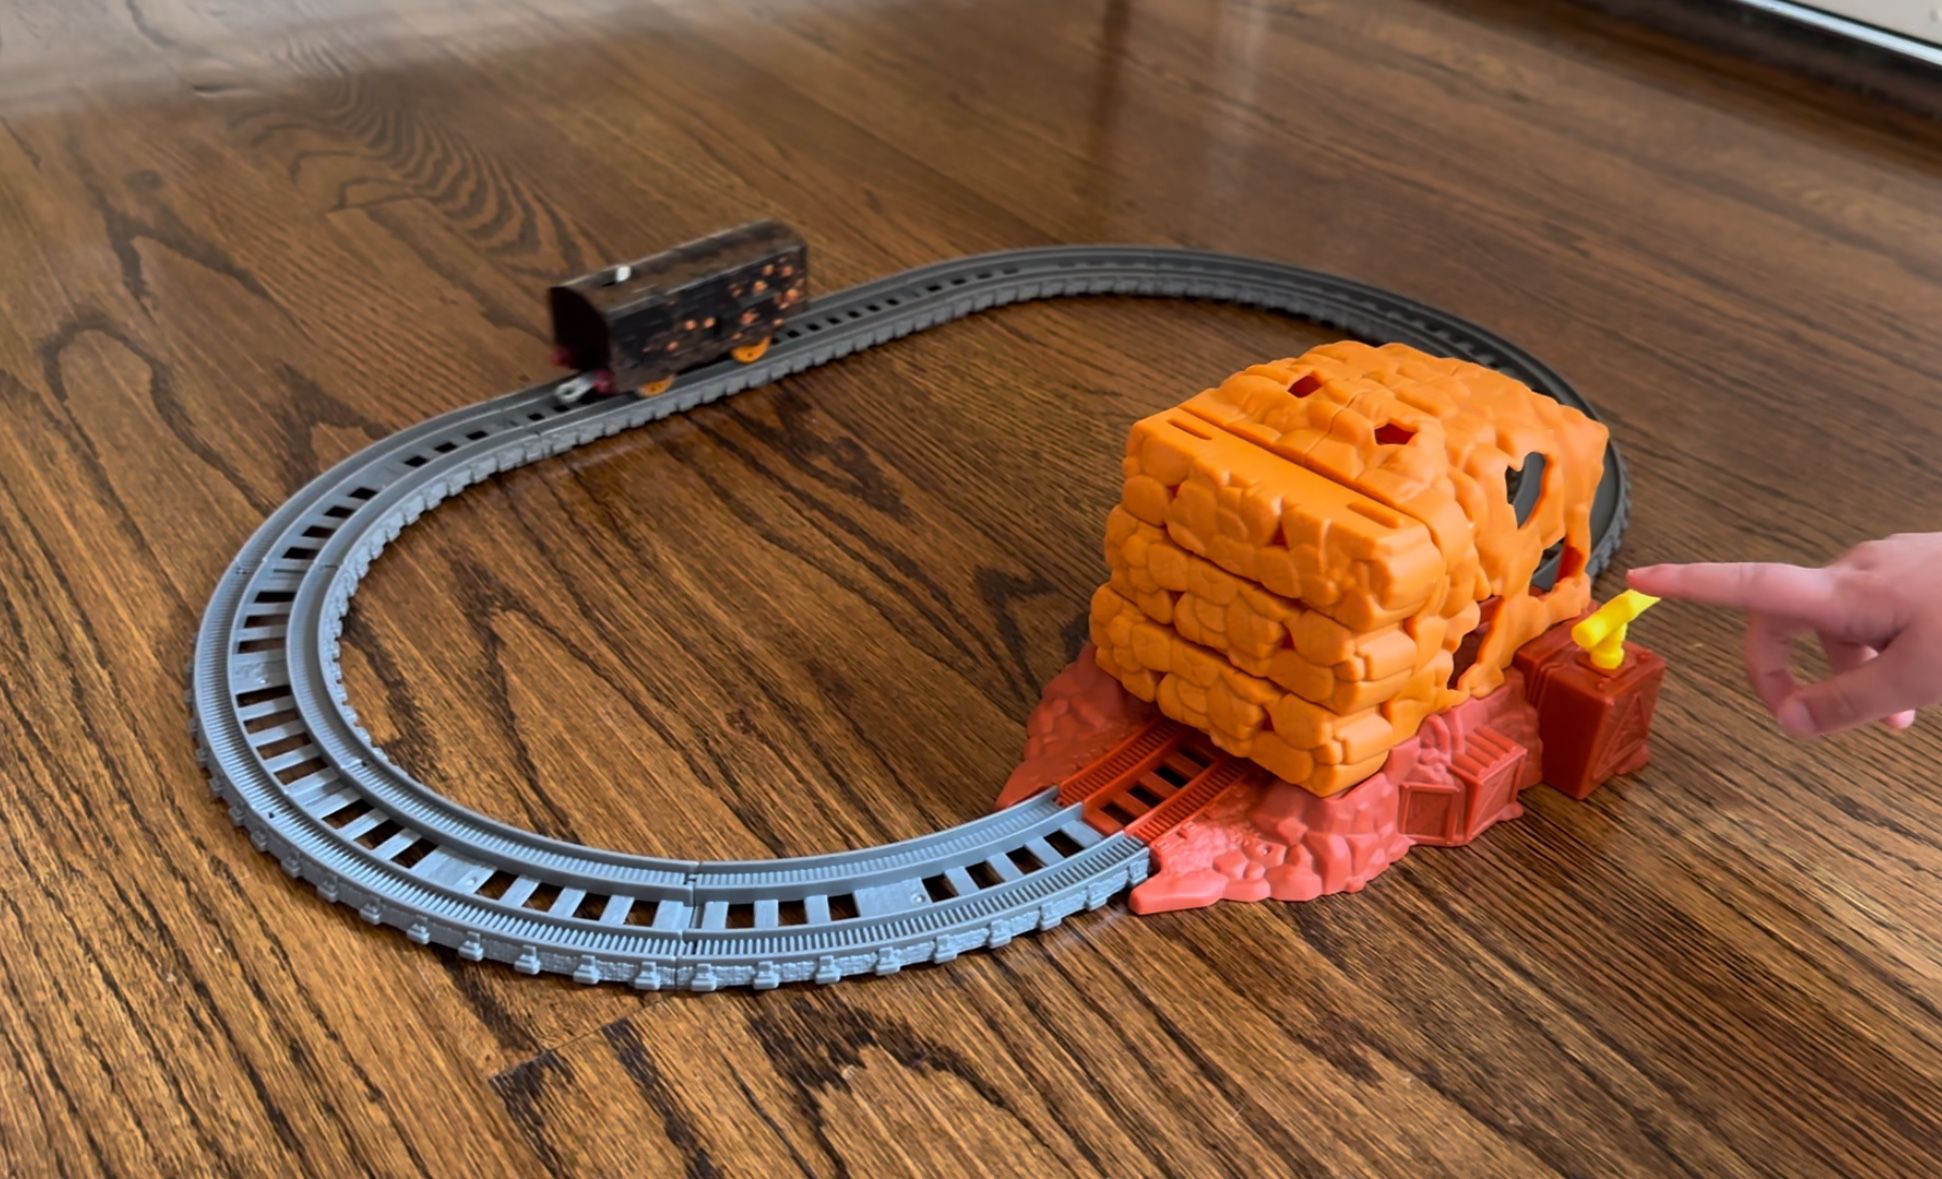 Thomas & Friends Track Master Tunnel Blast set